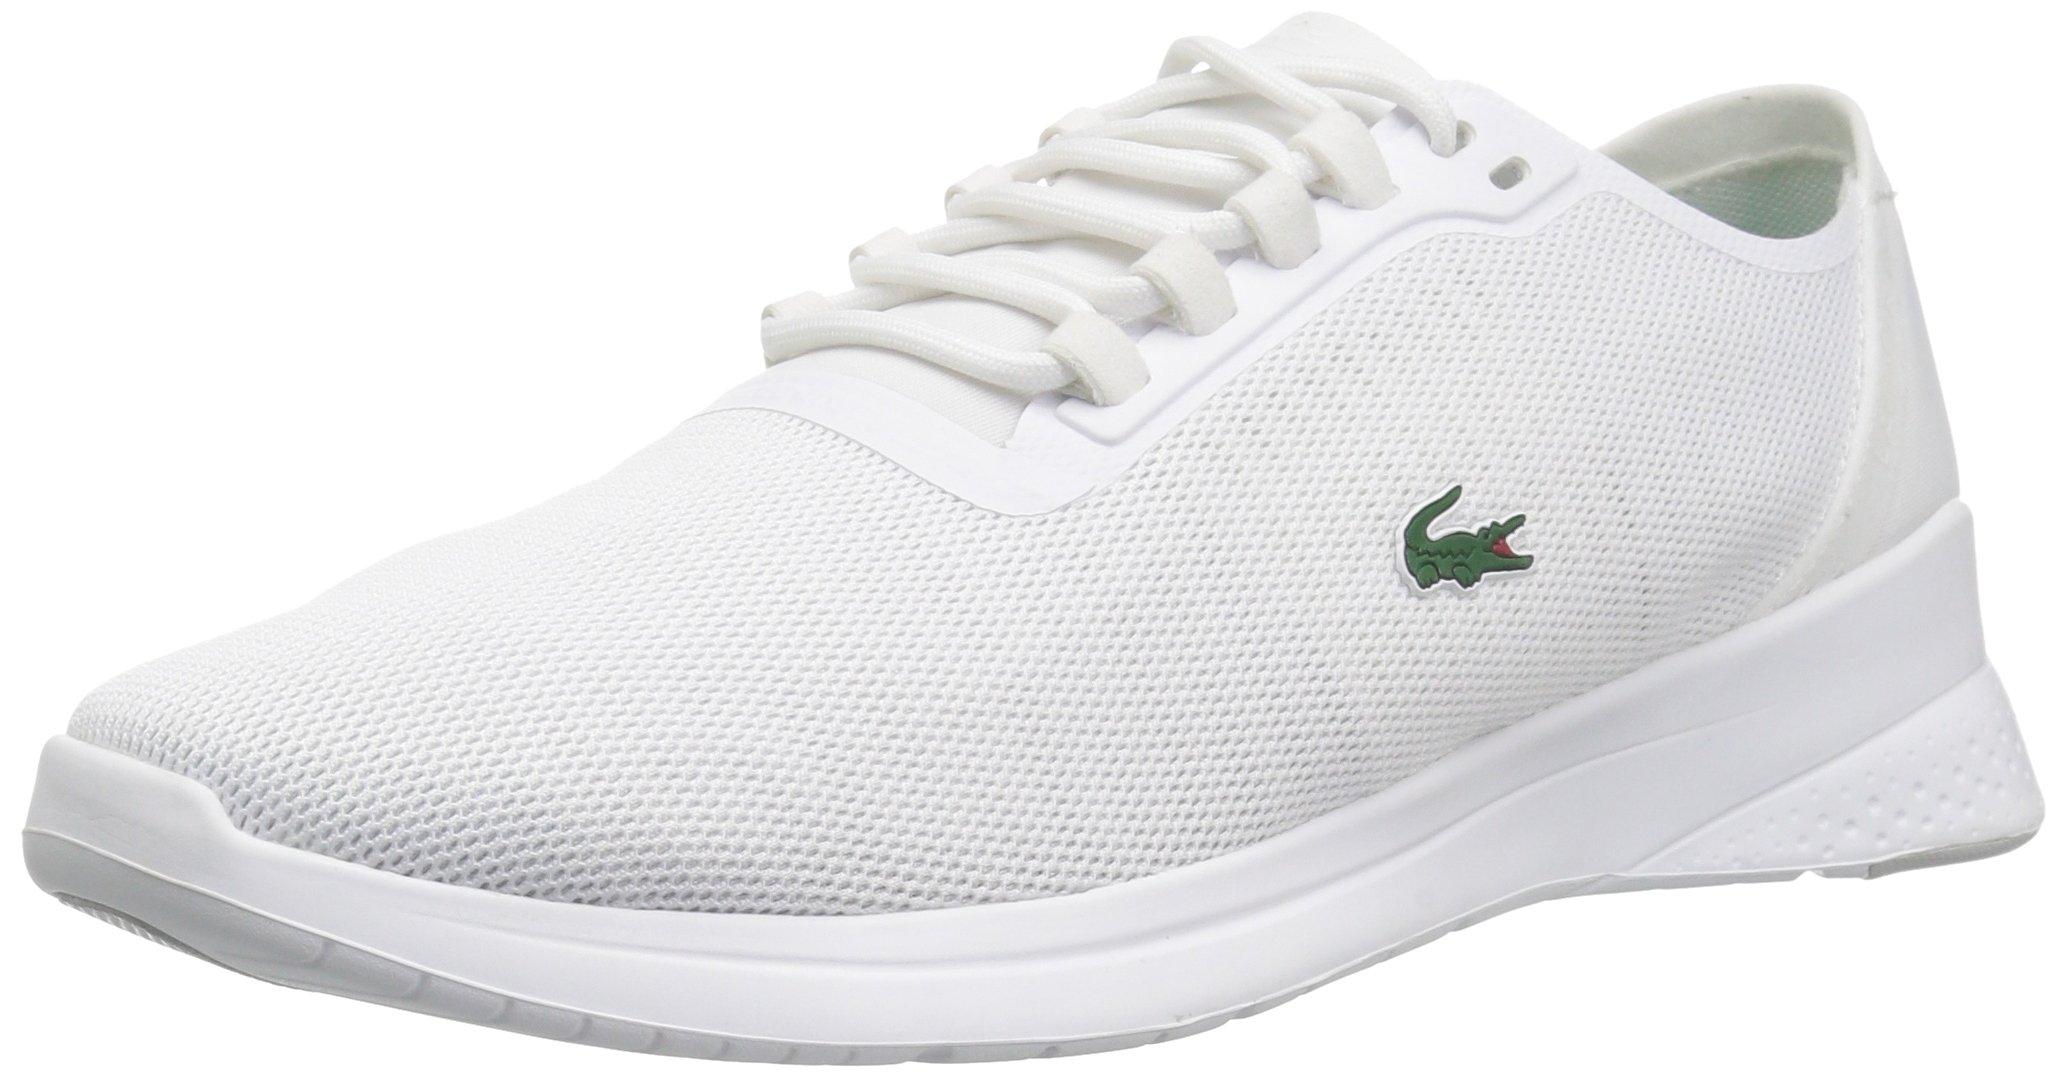 Modstander falme Skorpe Lacoste Cotton Lt Fit 118 4 Spw Sneaker in White/White (White) - Lyst